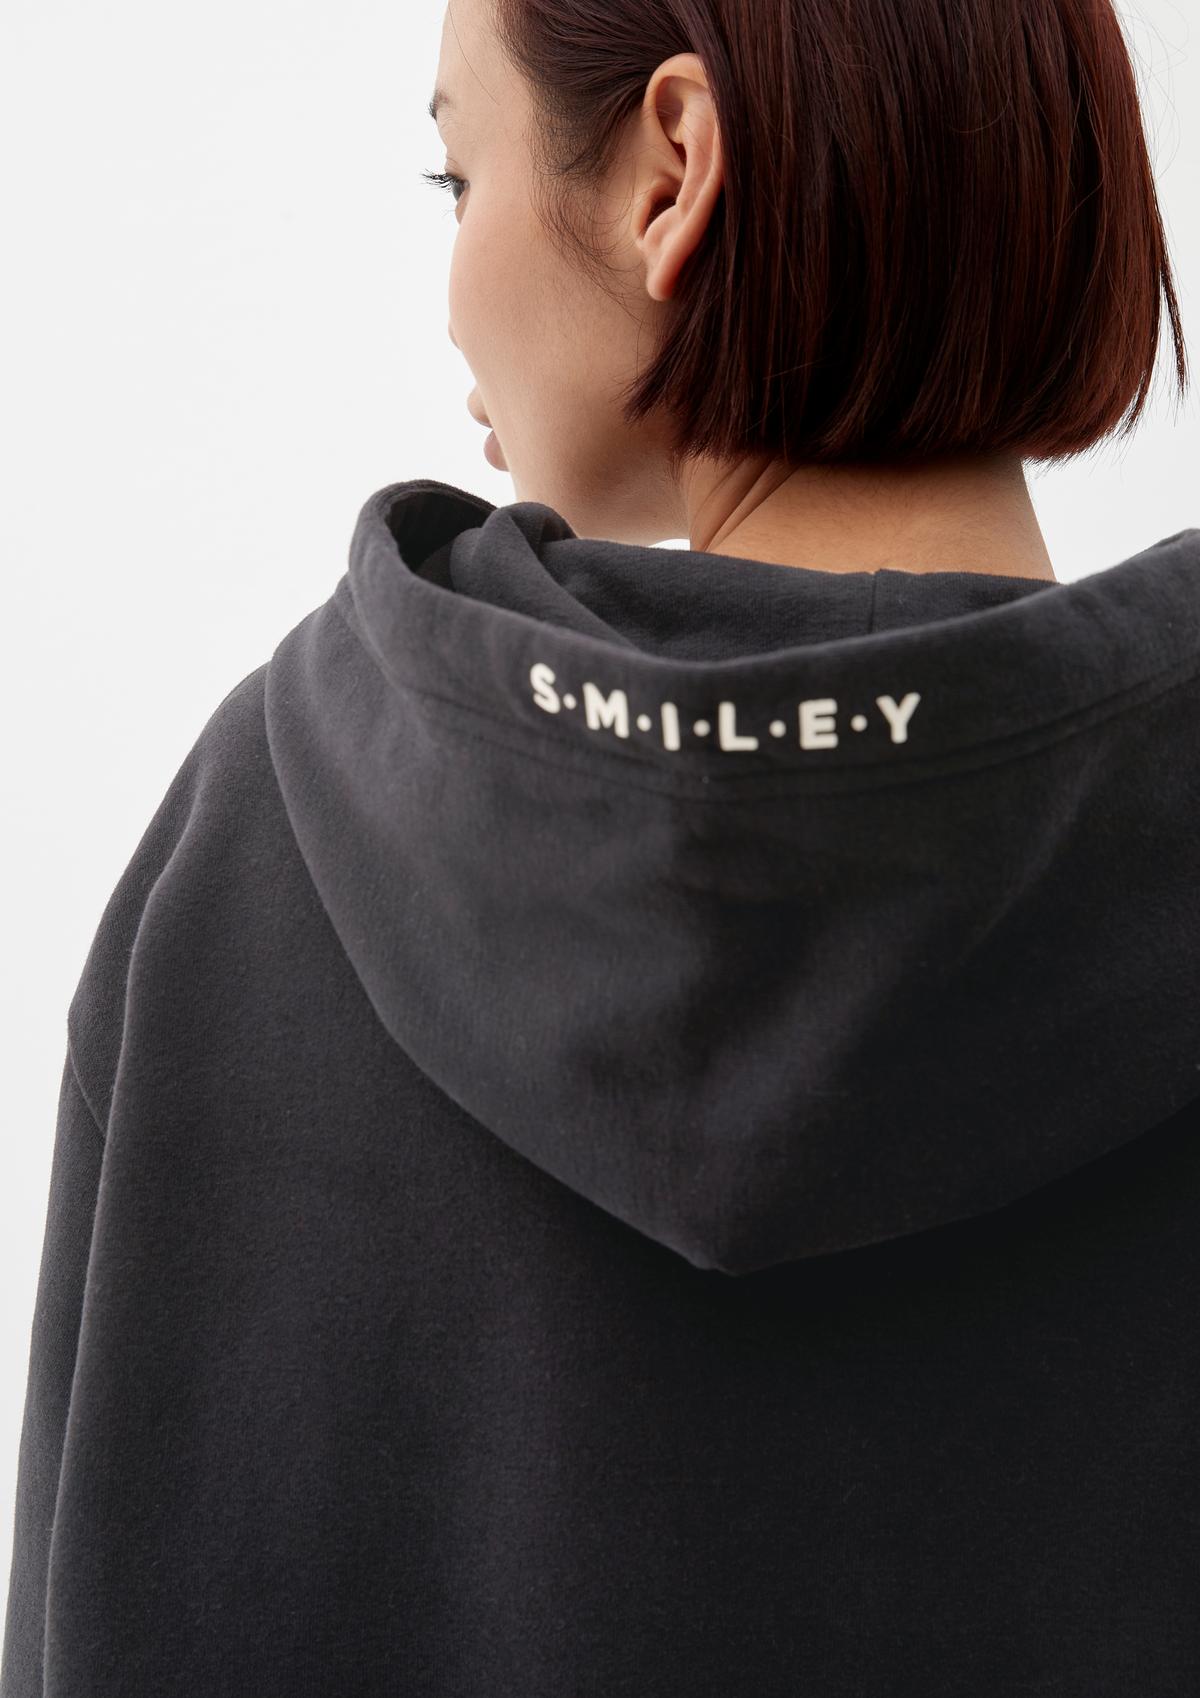 Langer Sweater mit Smiley®-Print - olivgrün